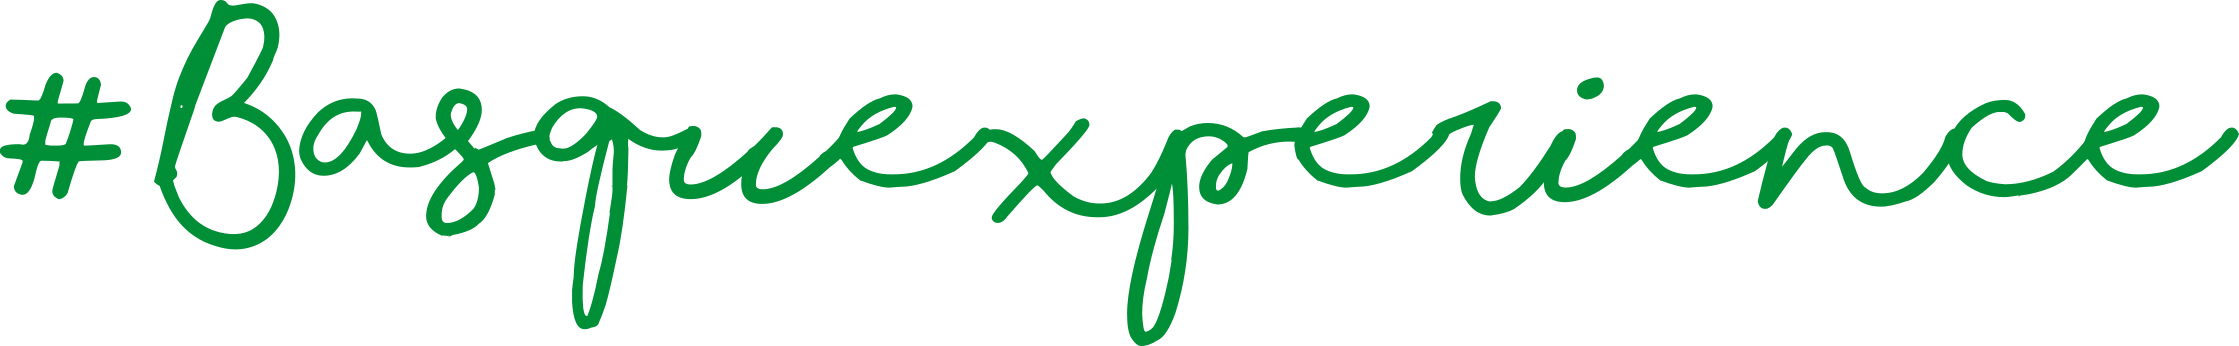 Basuq Experience logo